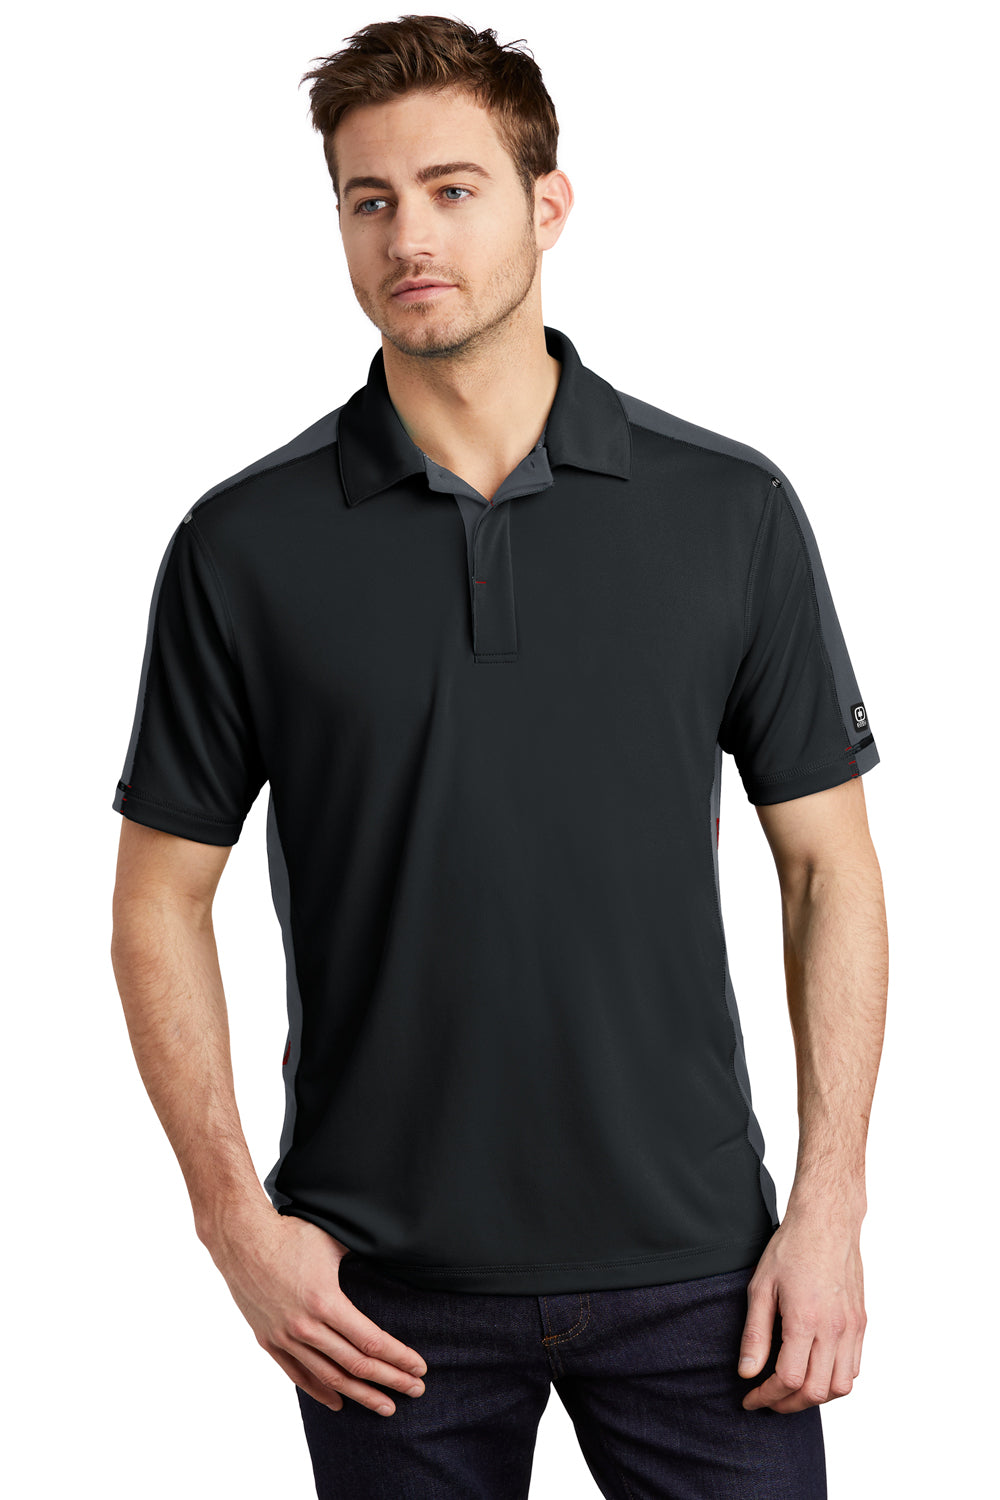 Ogio OG106 Mens Trax Moisture Wicking Short Sleeve Polo Shirt Black/Grey Front